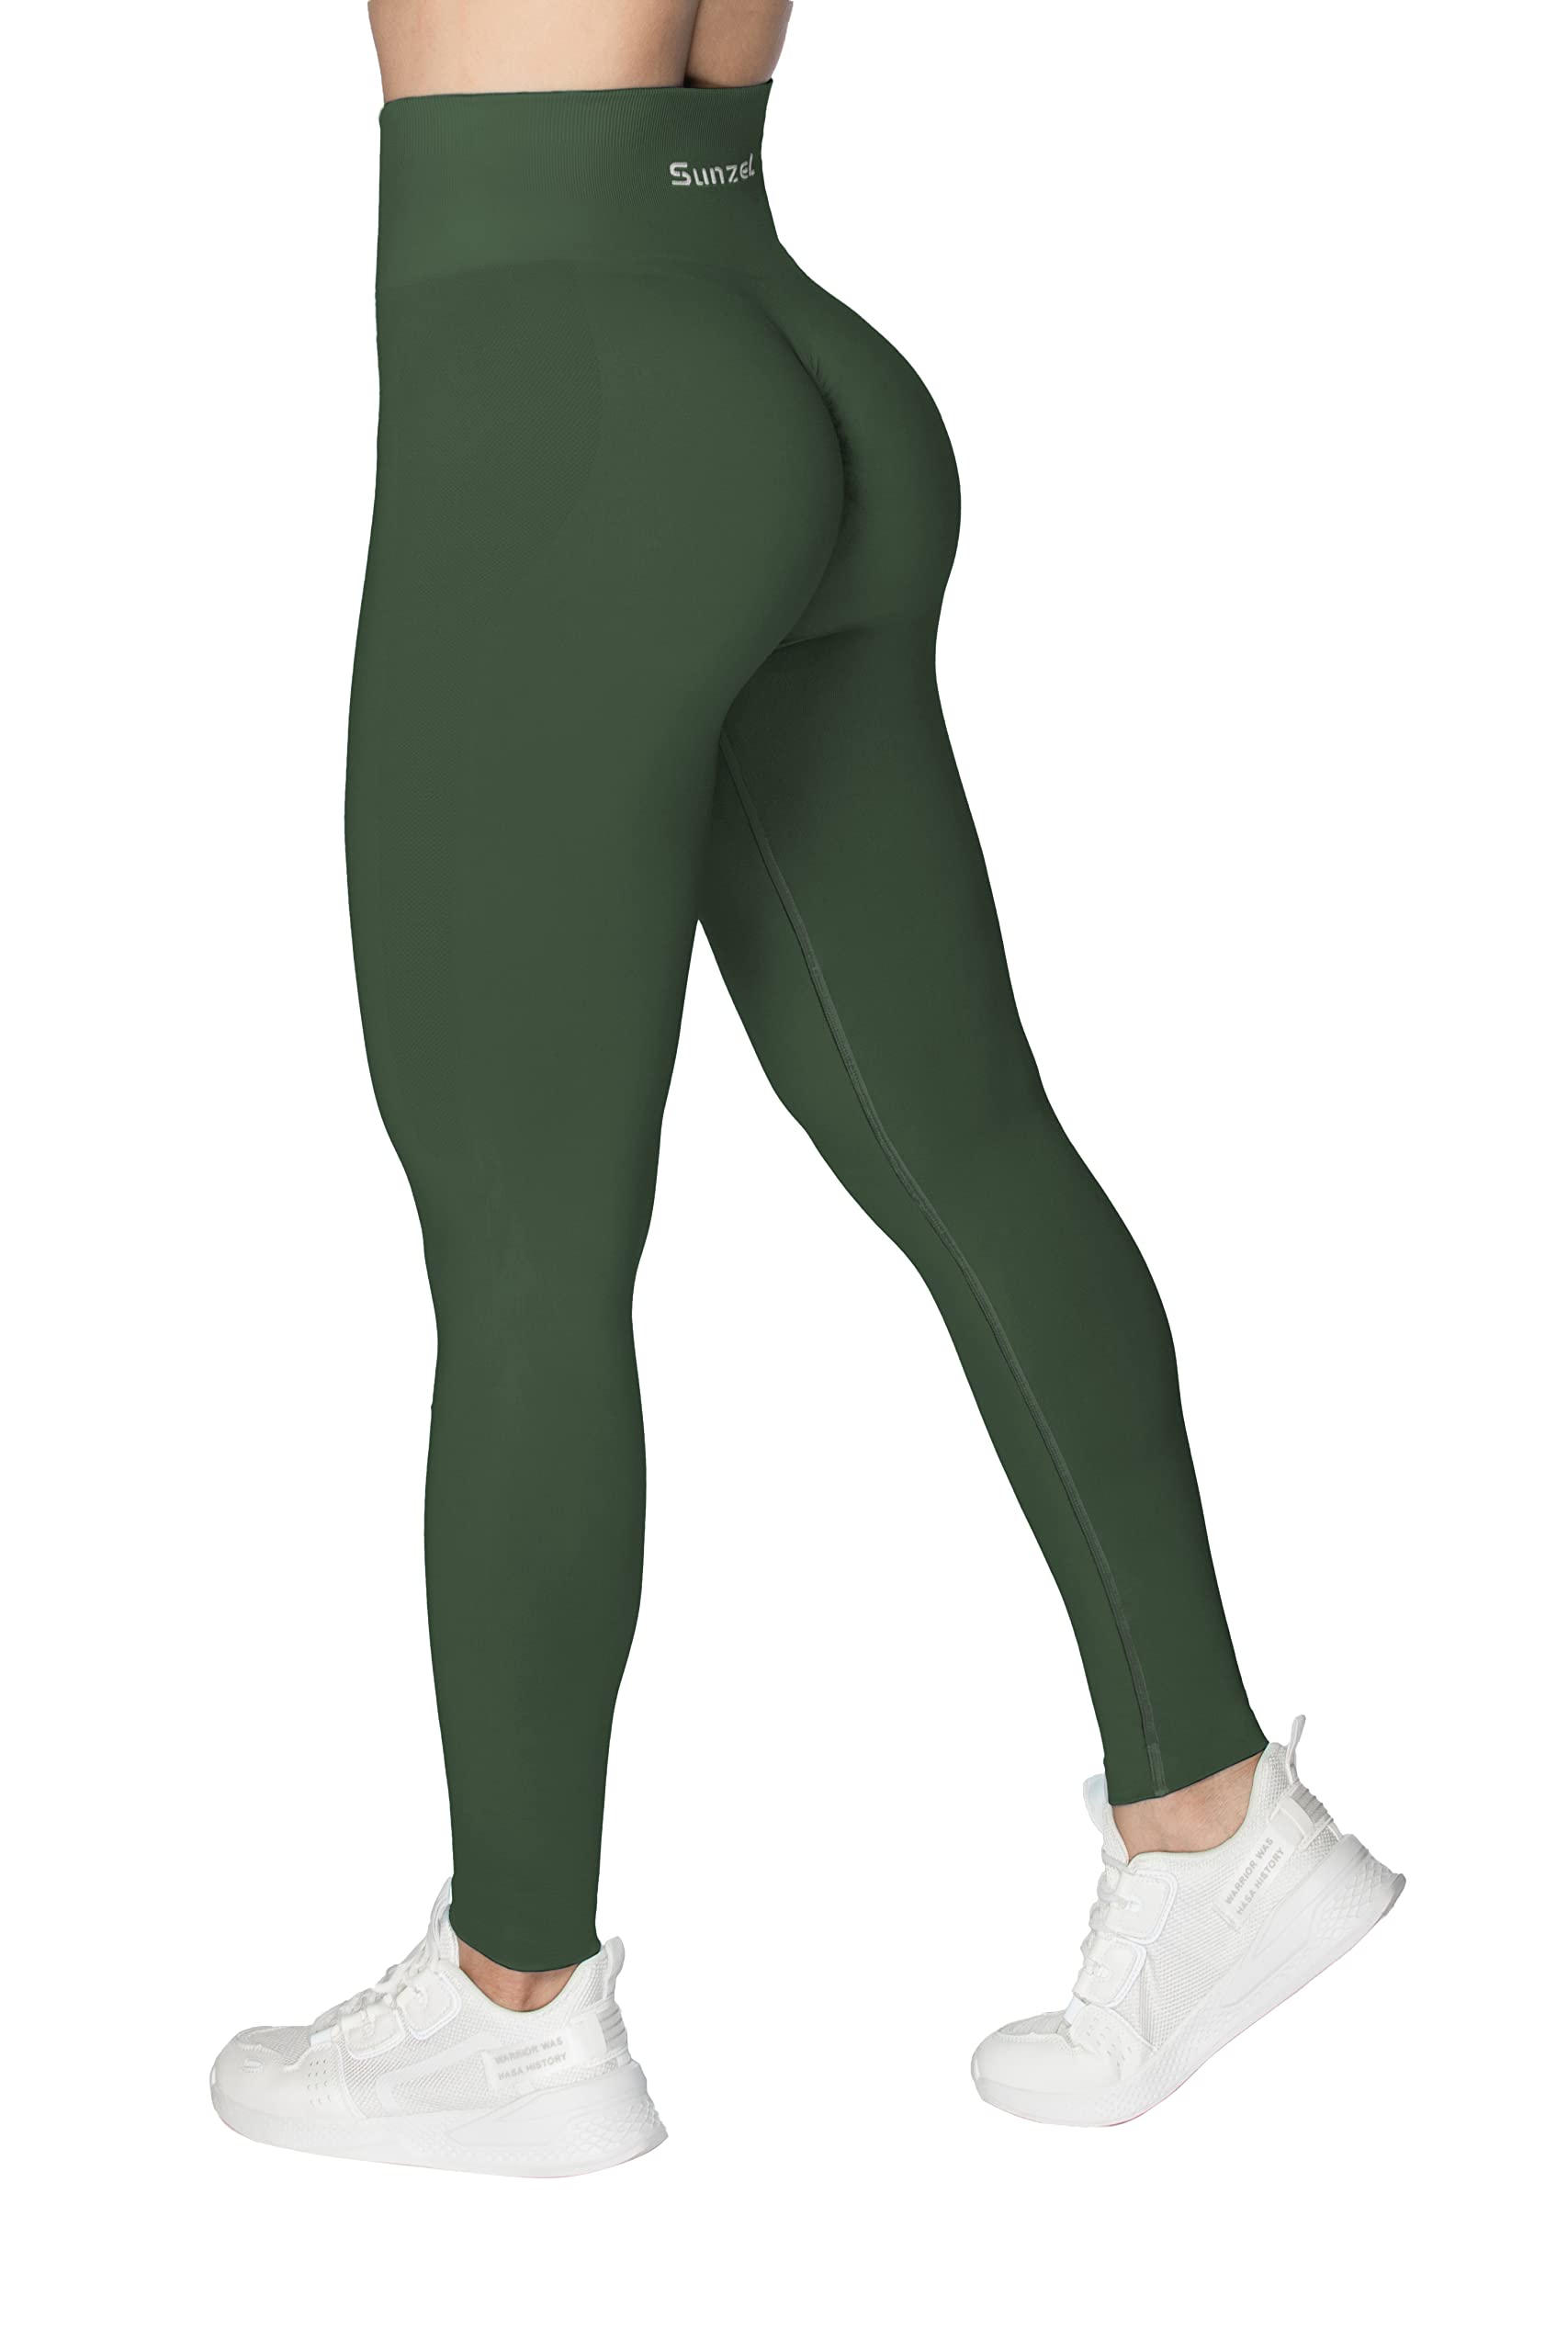 Buy Sunzel Scrunch Butt Lifting Leggings for Women High Waisted Seamless  Workout Leggings Gym Yoga Pants